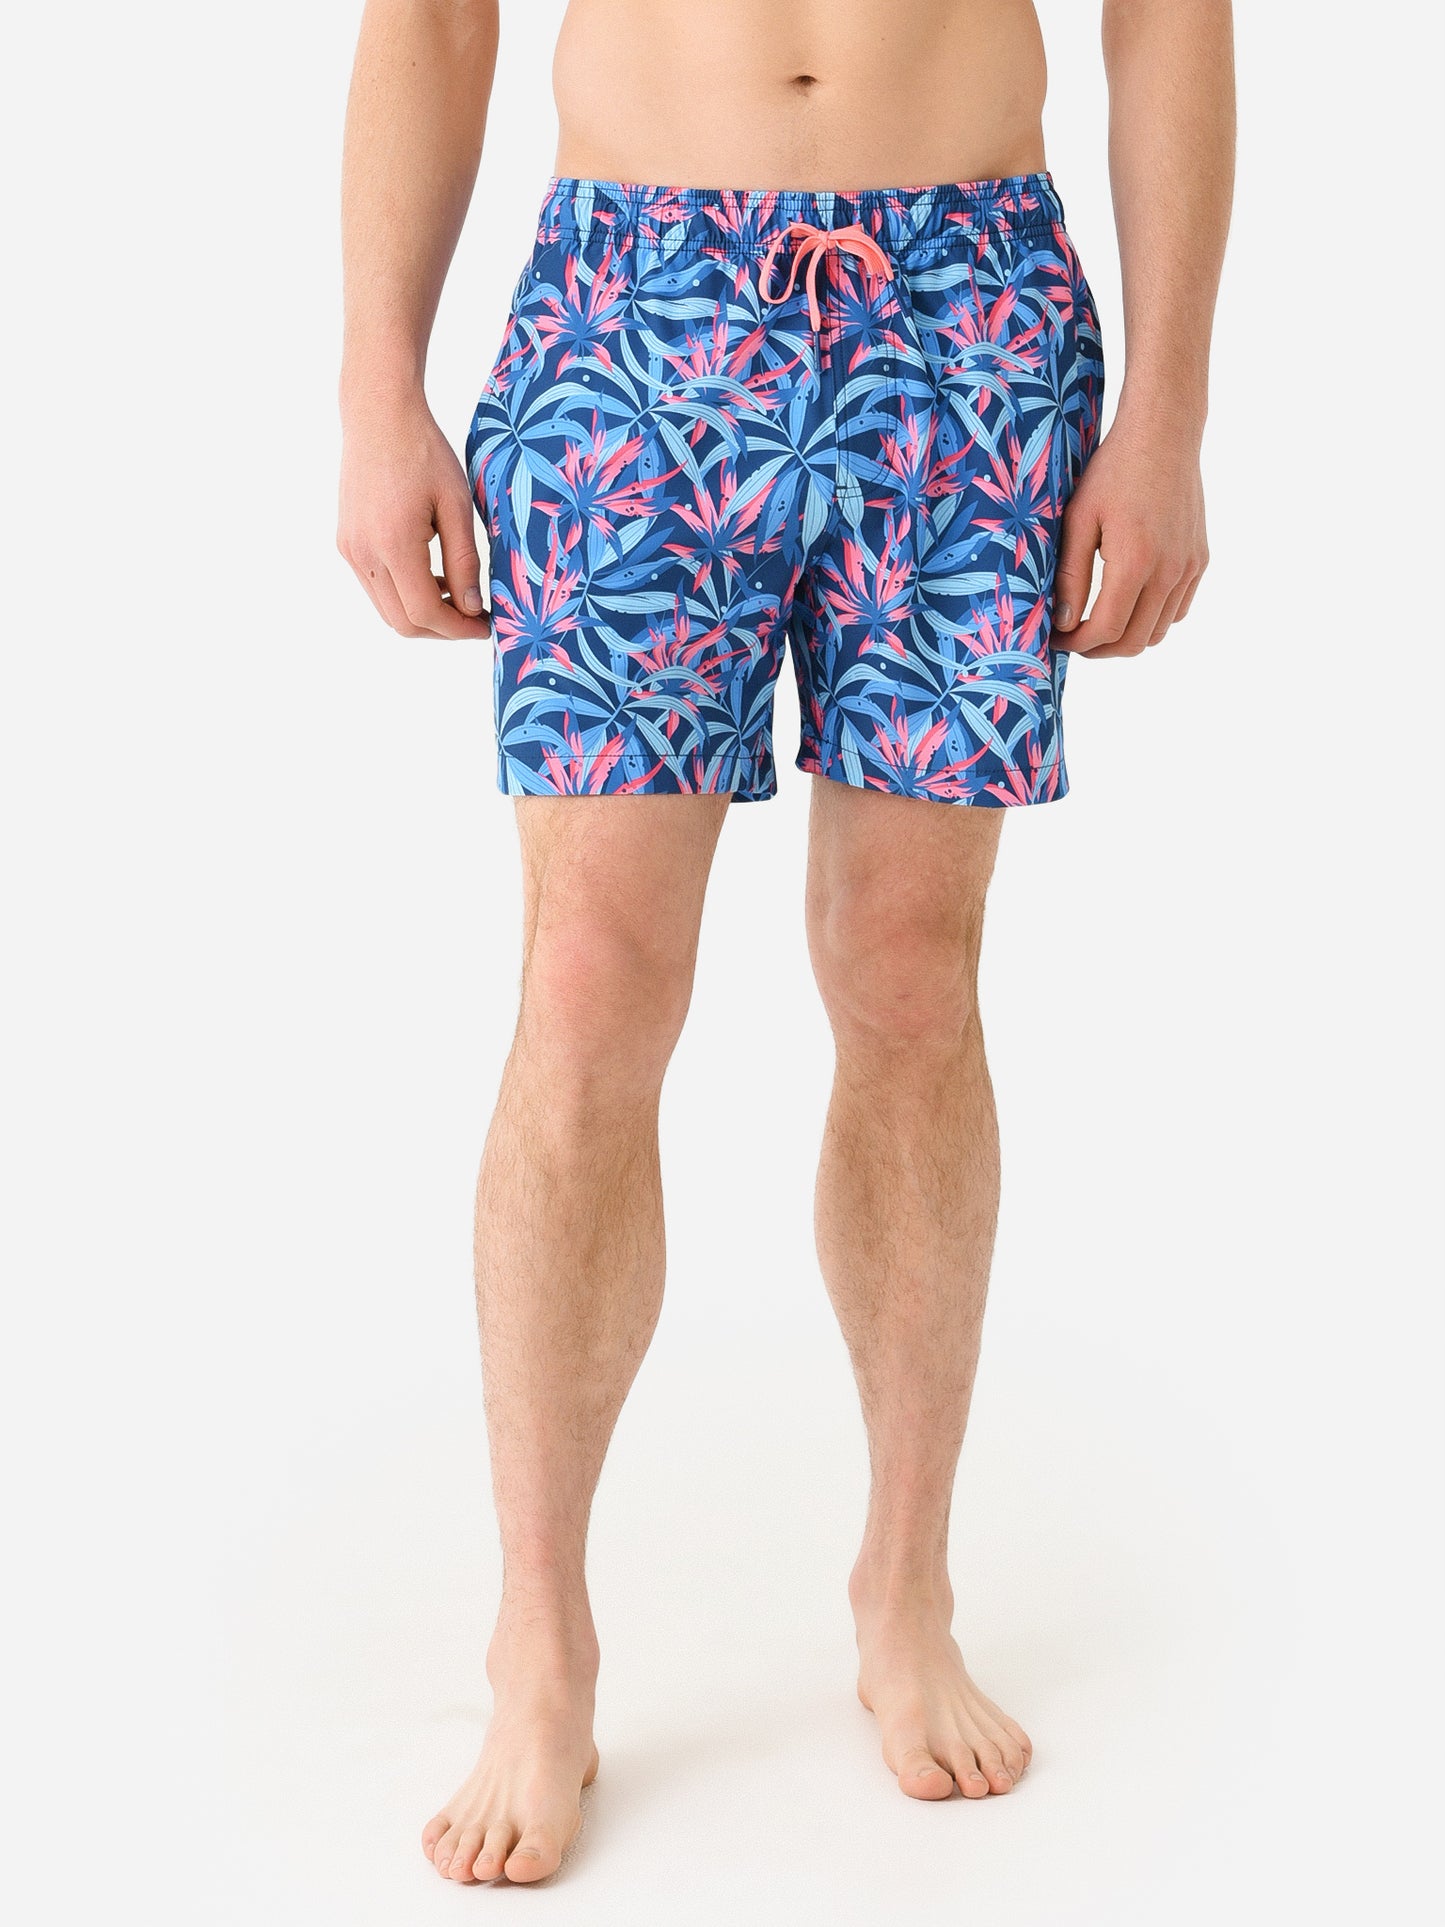 Southern Tide Men's Tropical Blooms Printed Swim Trunk